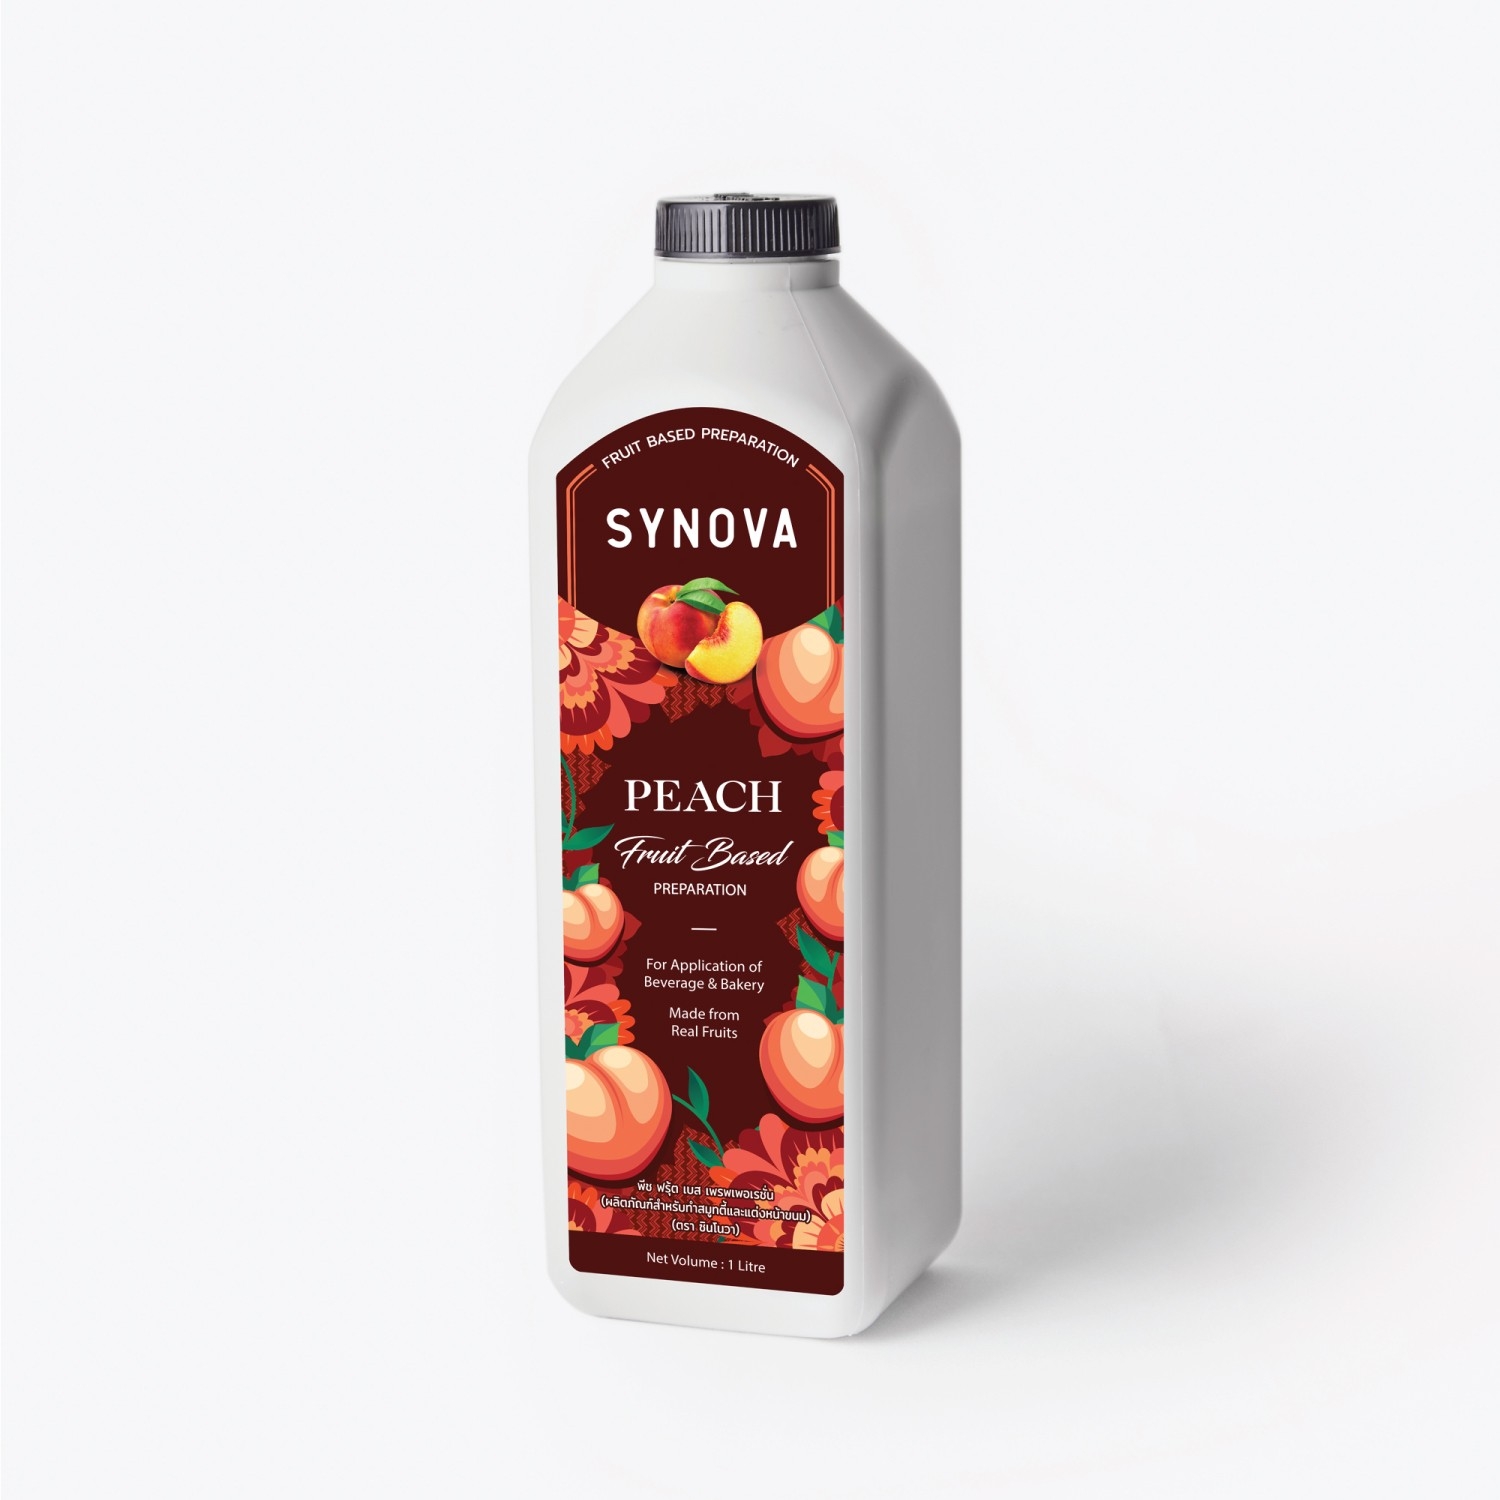 SYNOVA Peach Fruit Based Preparation (Box)